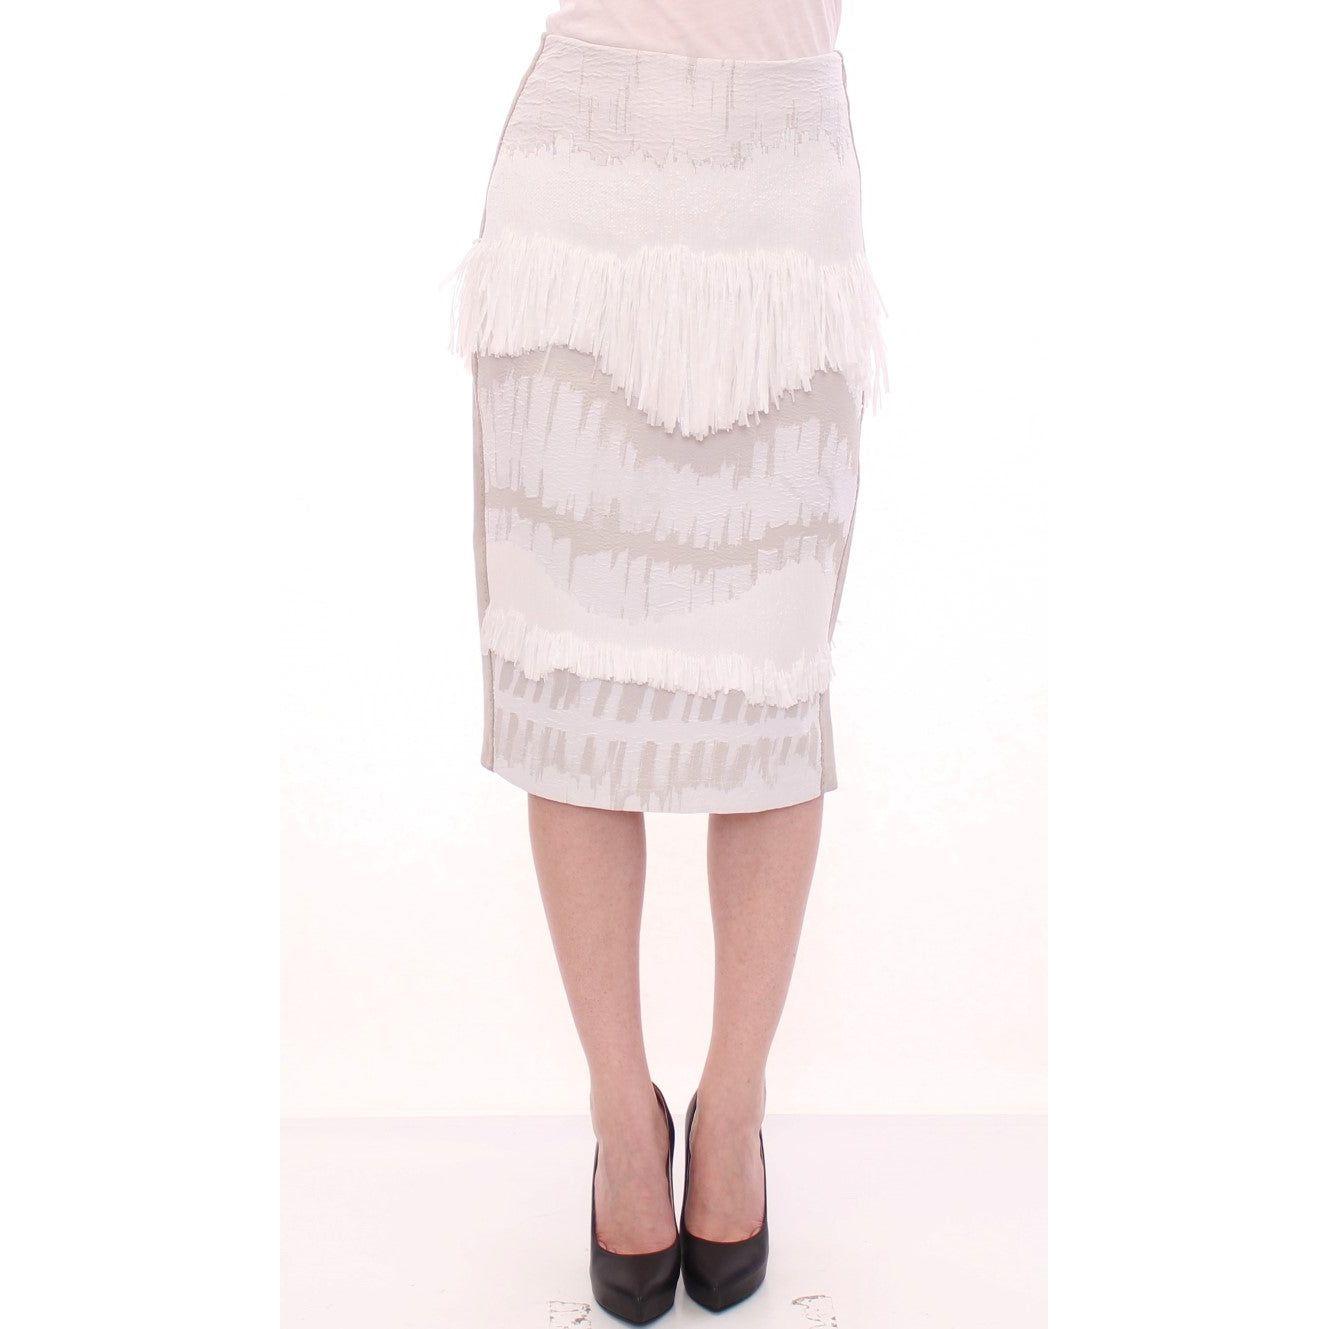 Arzu Kaprol Elegant Pencil Skirt in White and Gray Tones white-acrylic-straight-pencil-skirt 149709-white-acrylic-straight-pencil-skirt.jpg